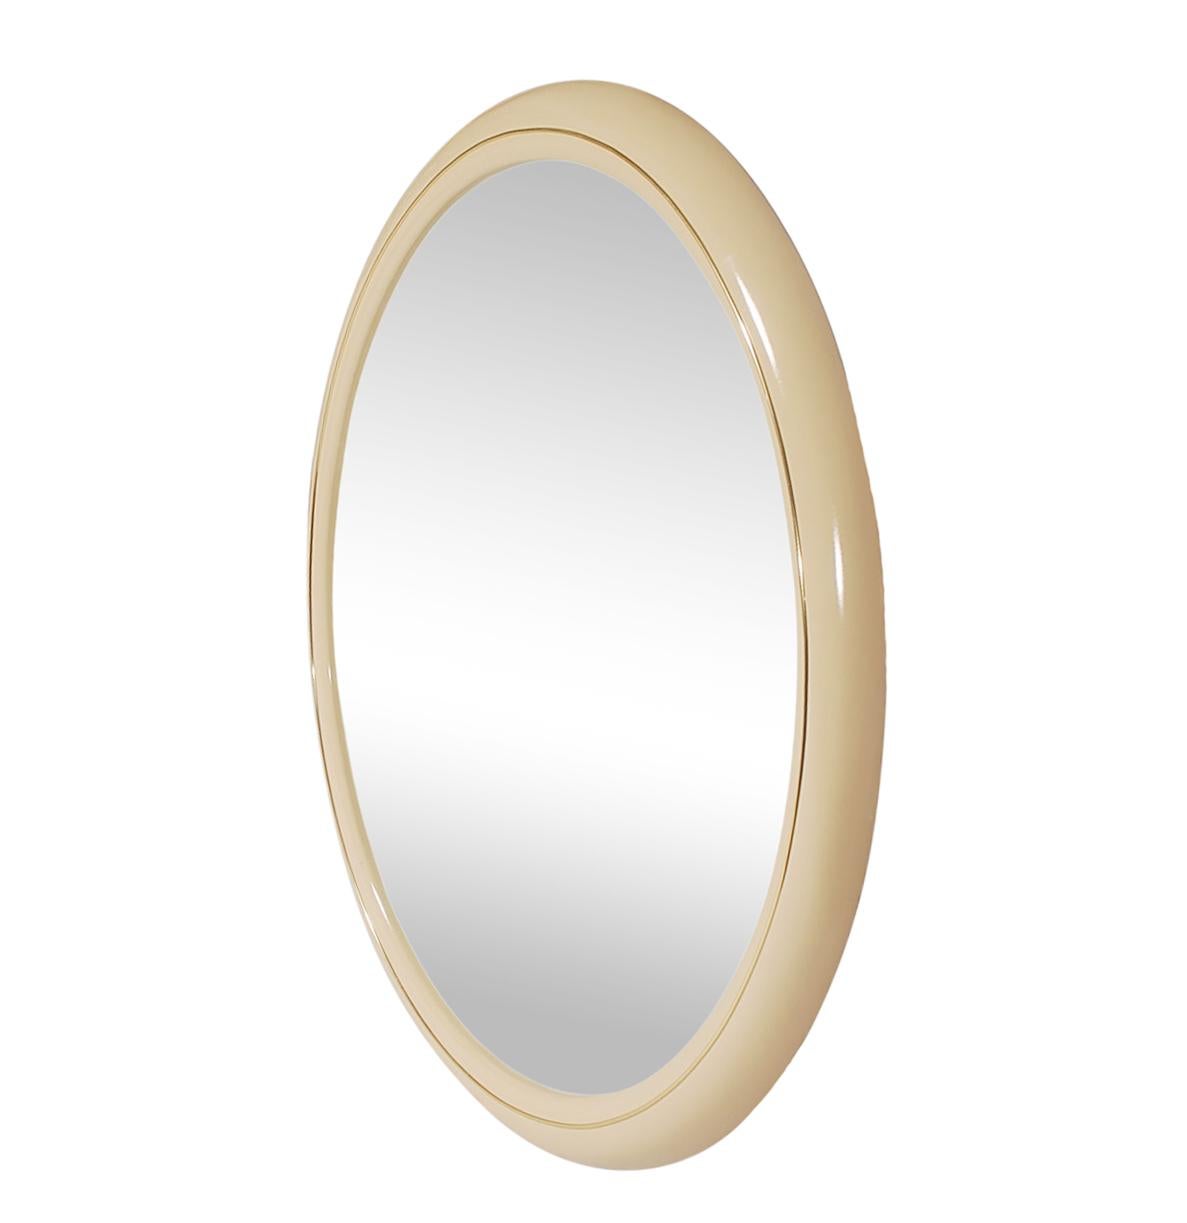 white circular mirror